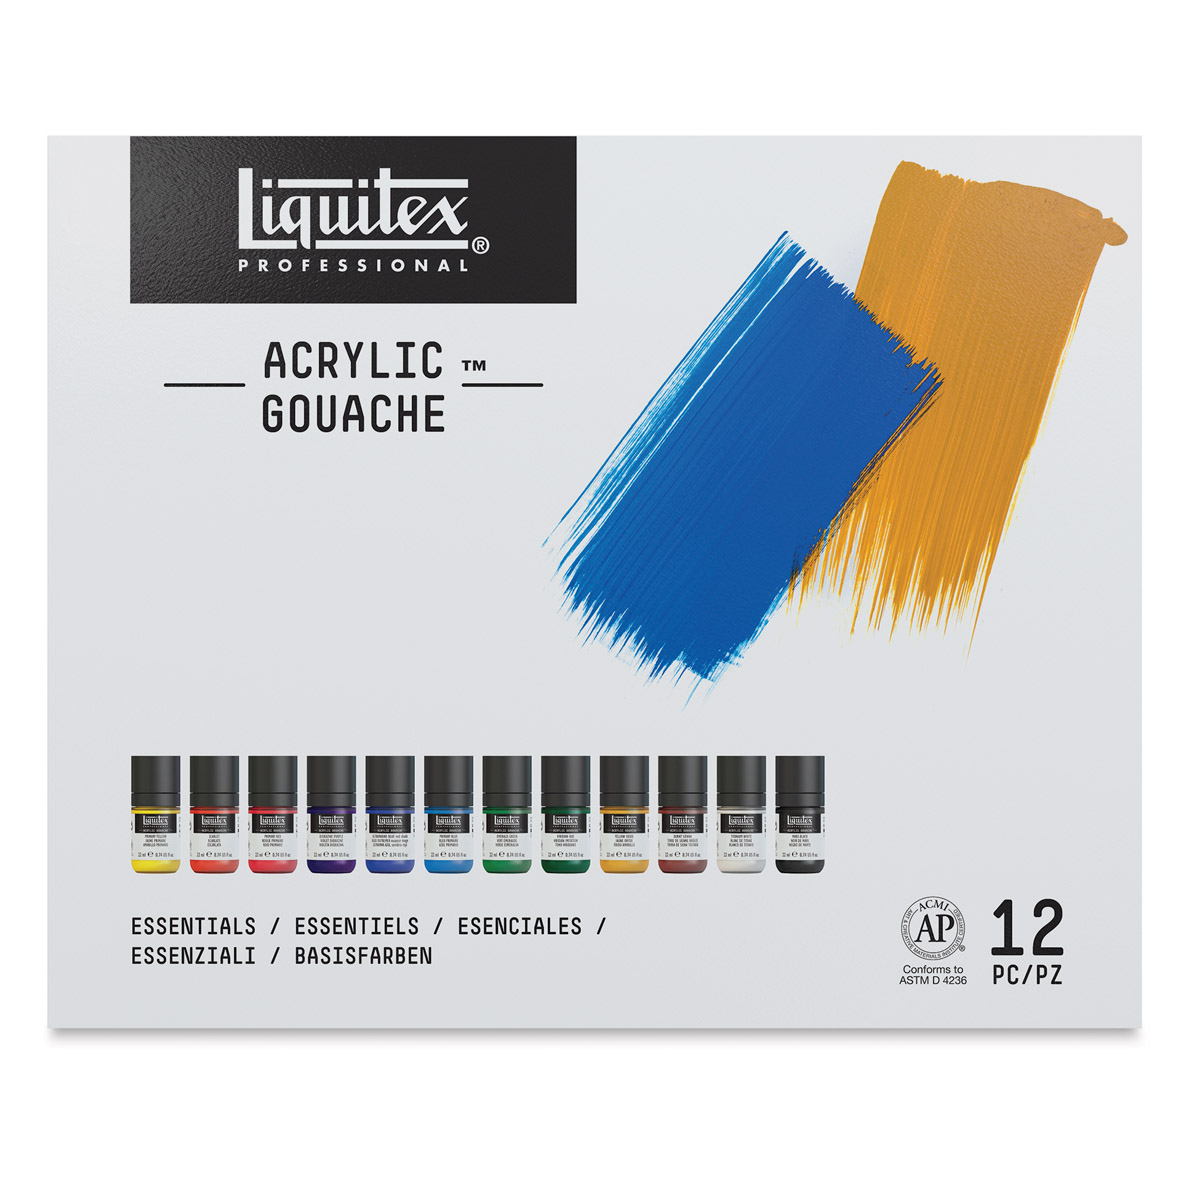 Liquitex Professional Acrylic Gouache Sets